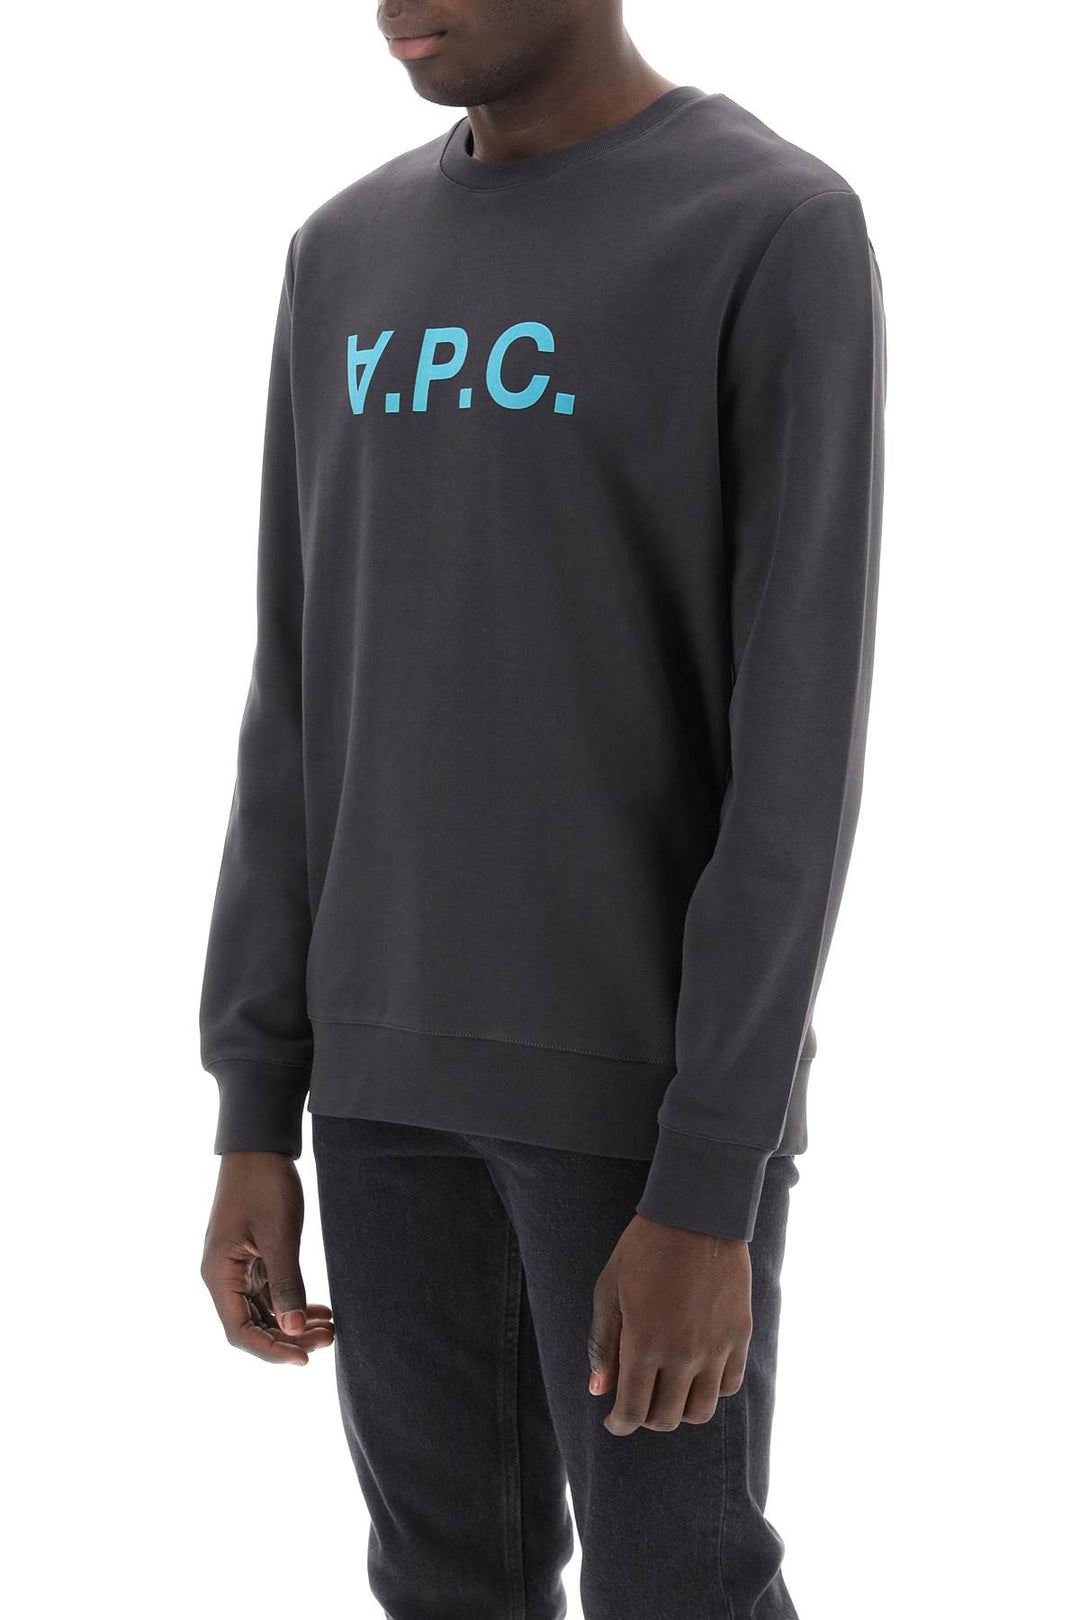 A.P.C. Flock V.P.C. Logo Sweatshirt   Grey